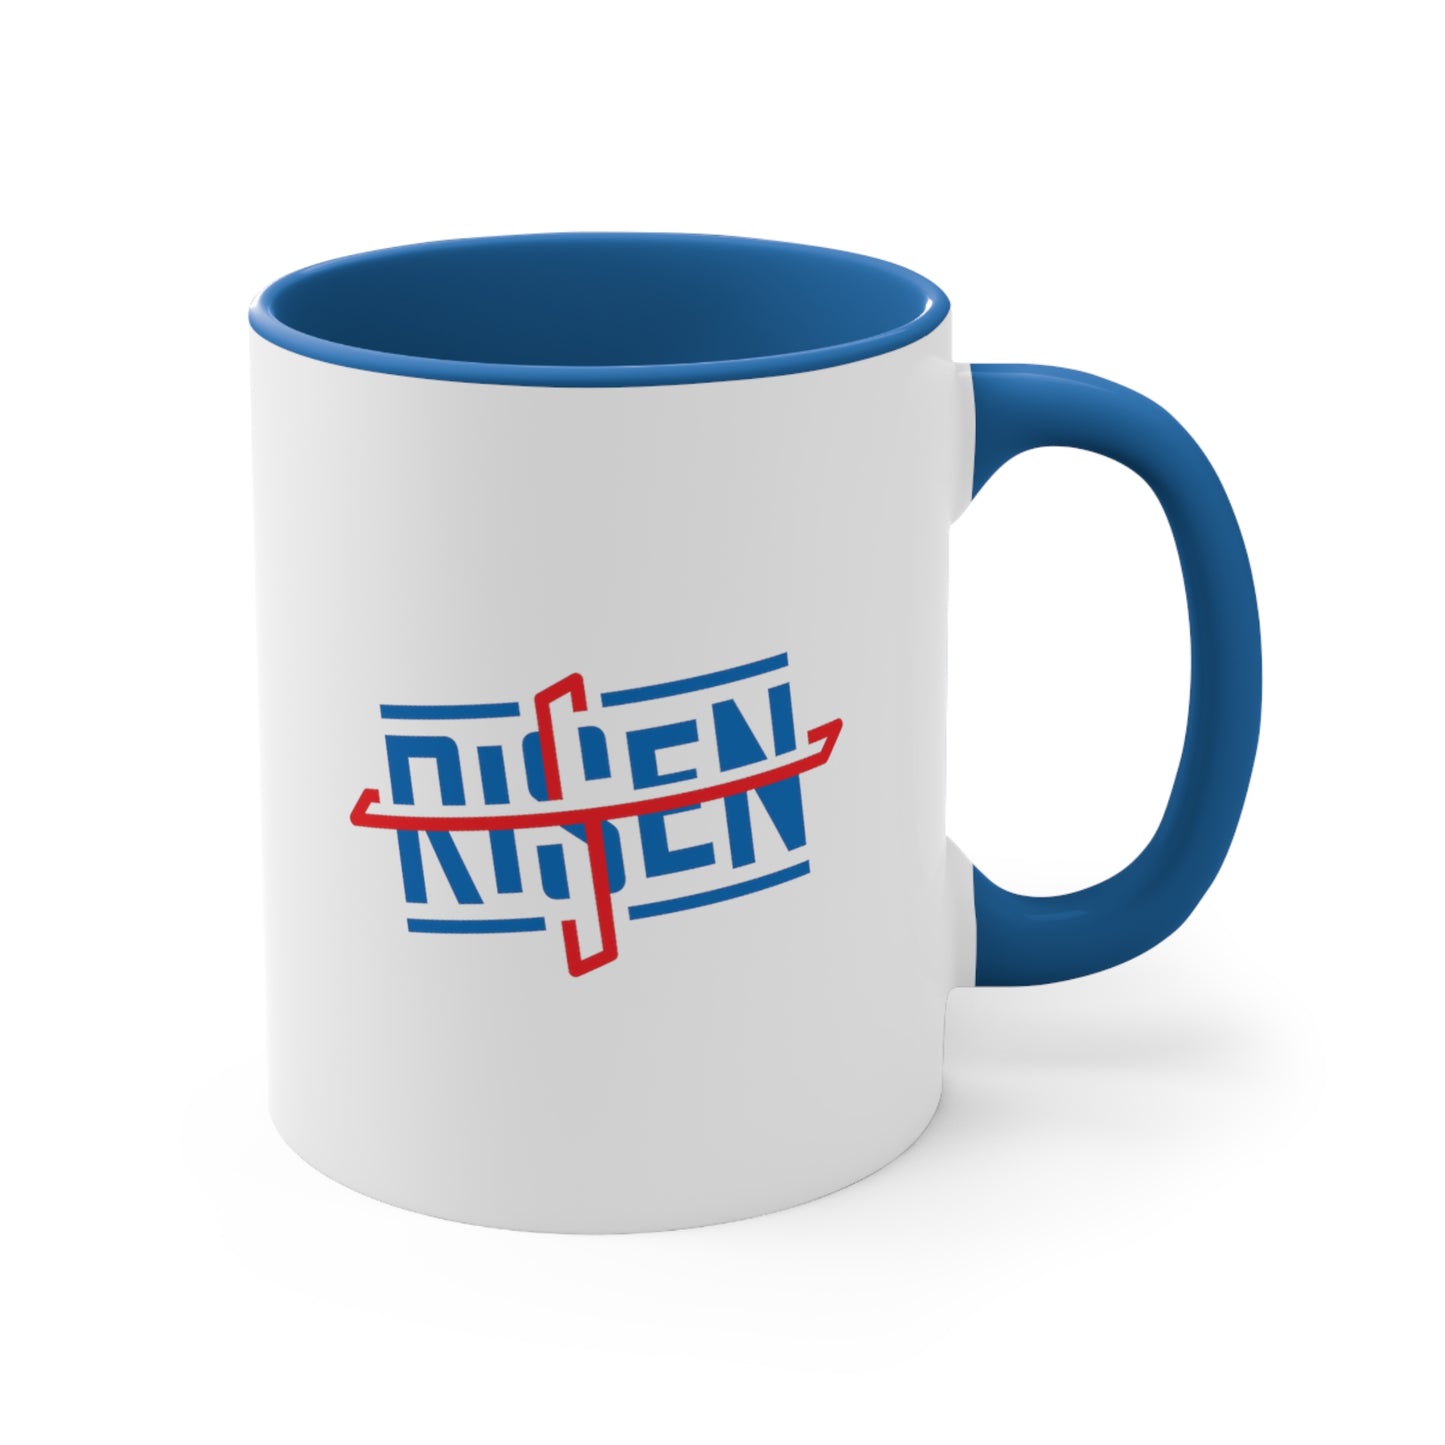 Risen BRW - Accent Coffee Mug, 11oz